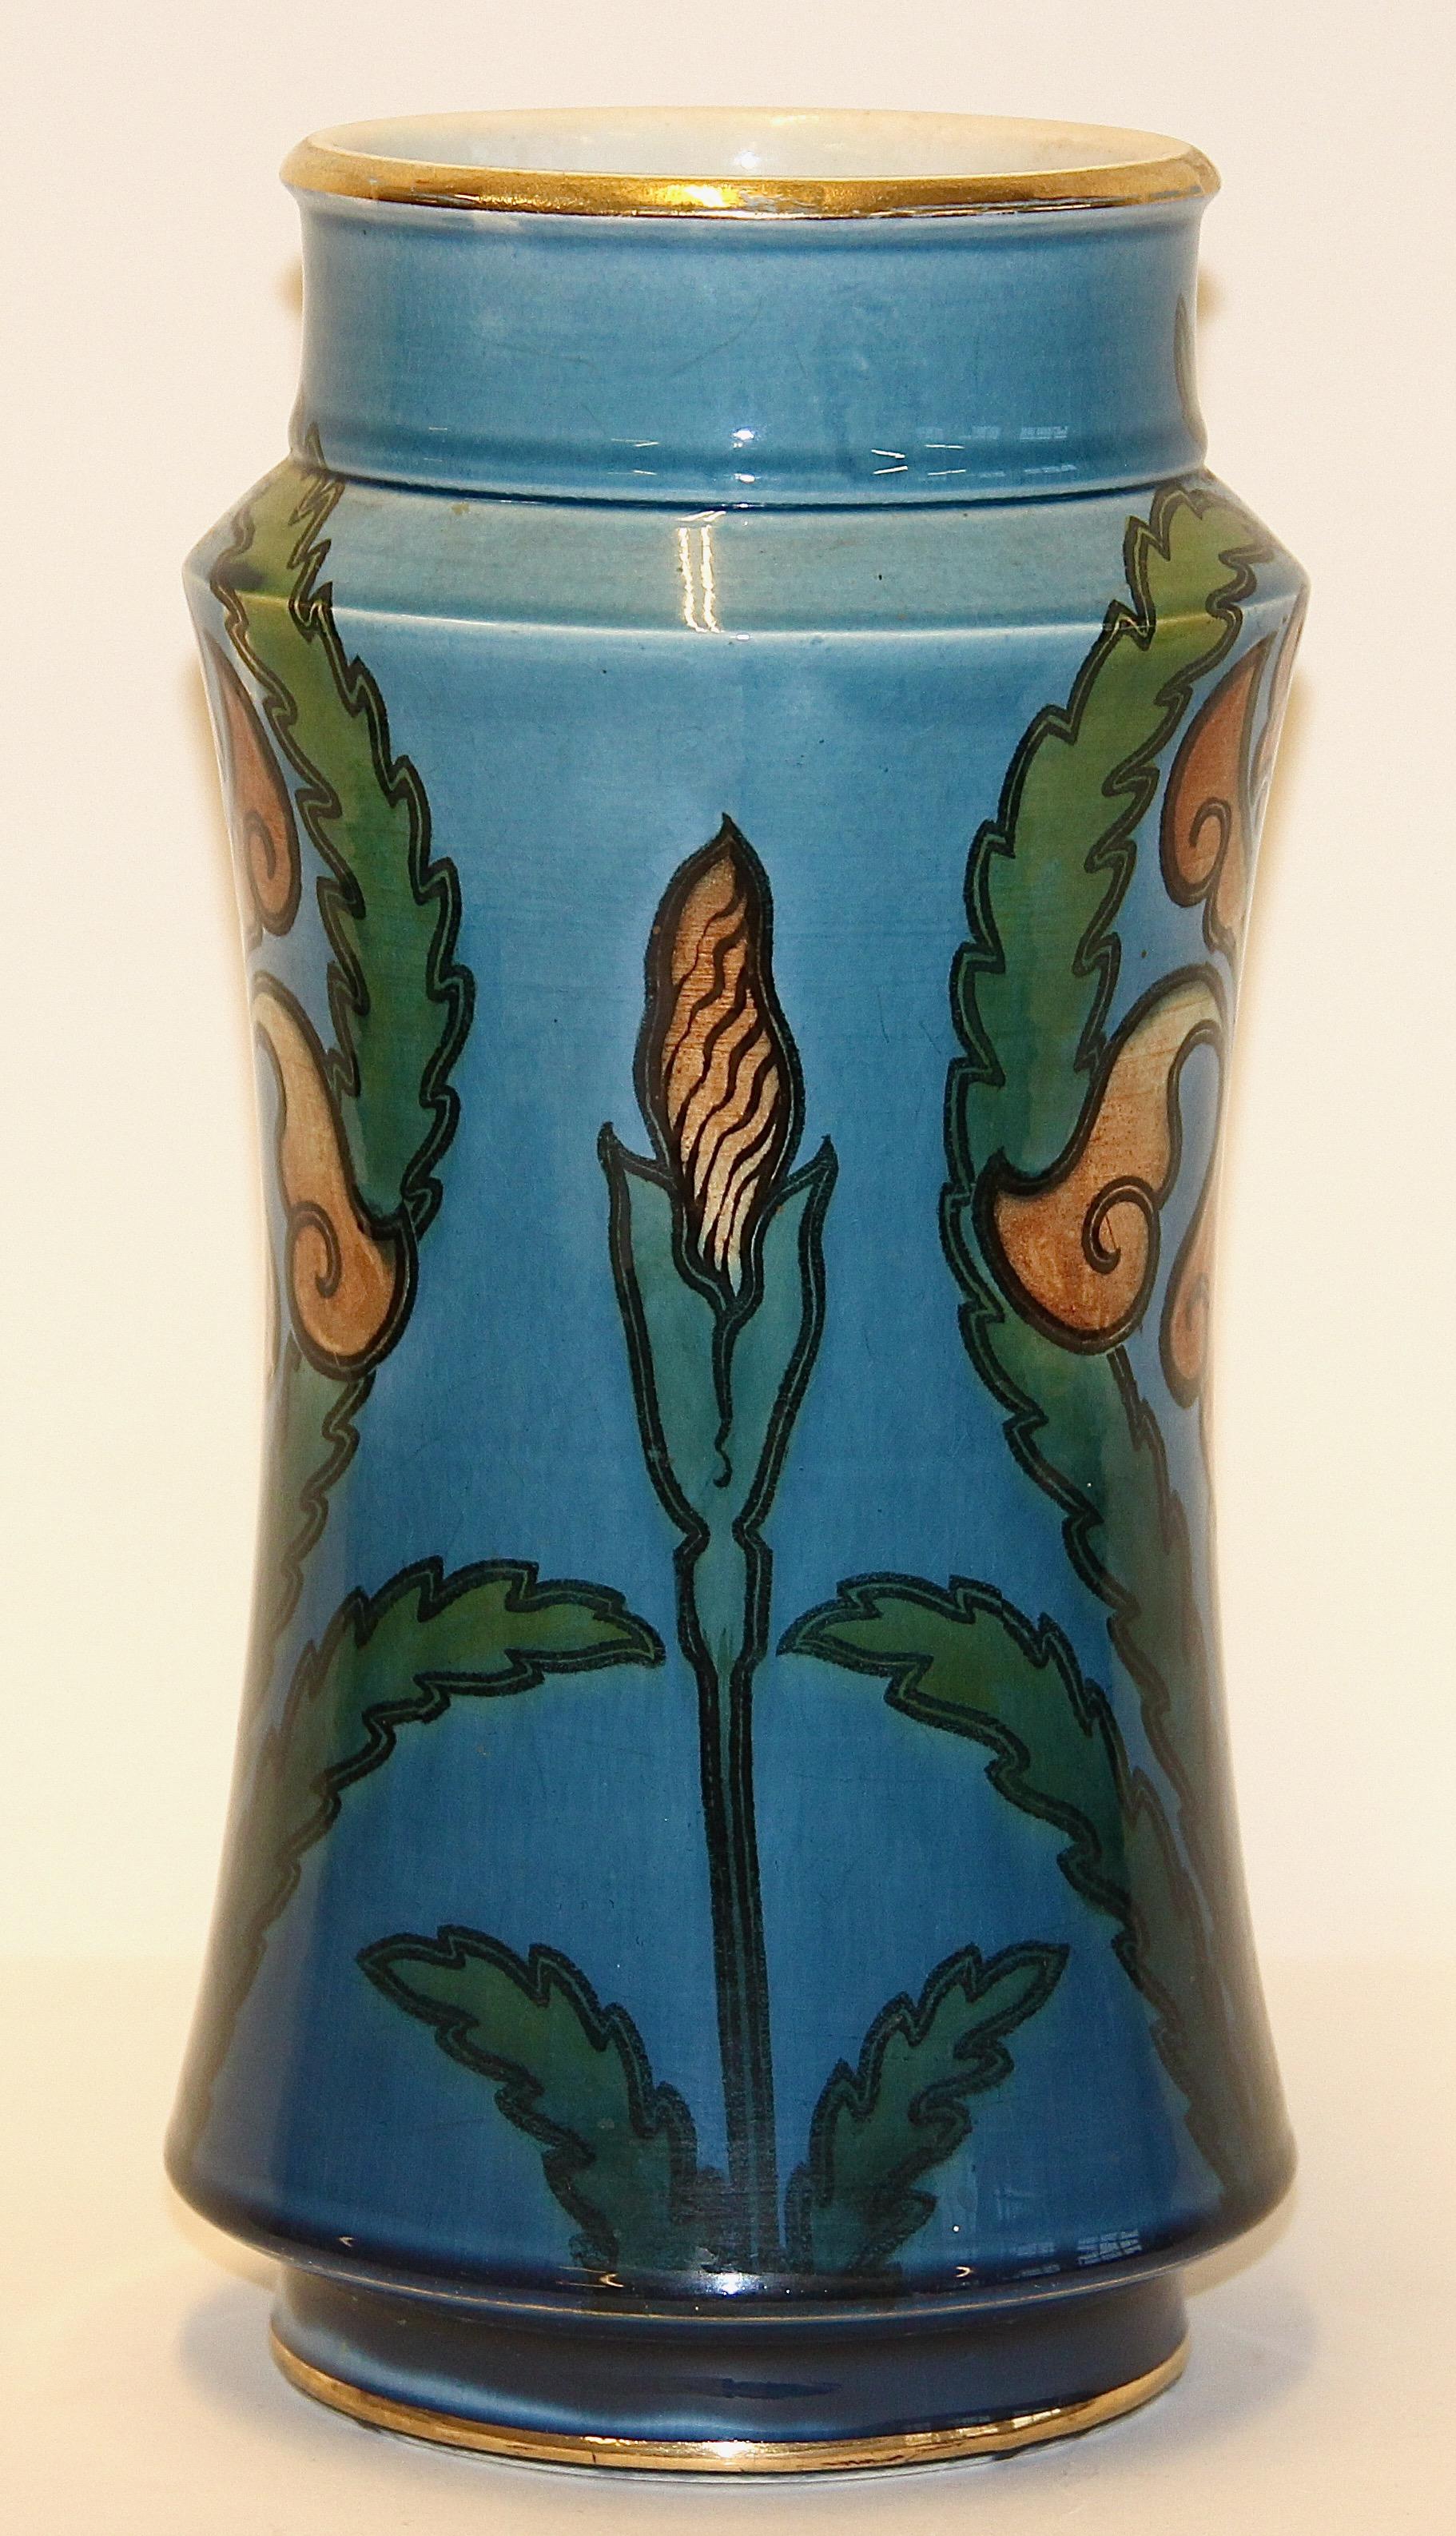 Decorative Art Nouveau ceramic vase, vessel by Villeroy & Boch, Mettlach.

Light chip on the bottom edge.